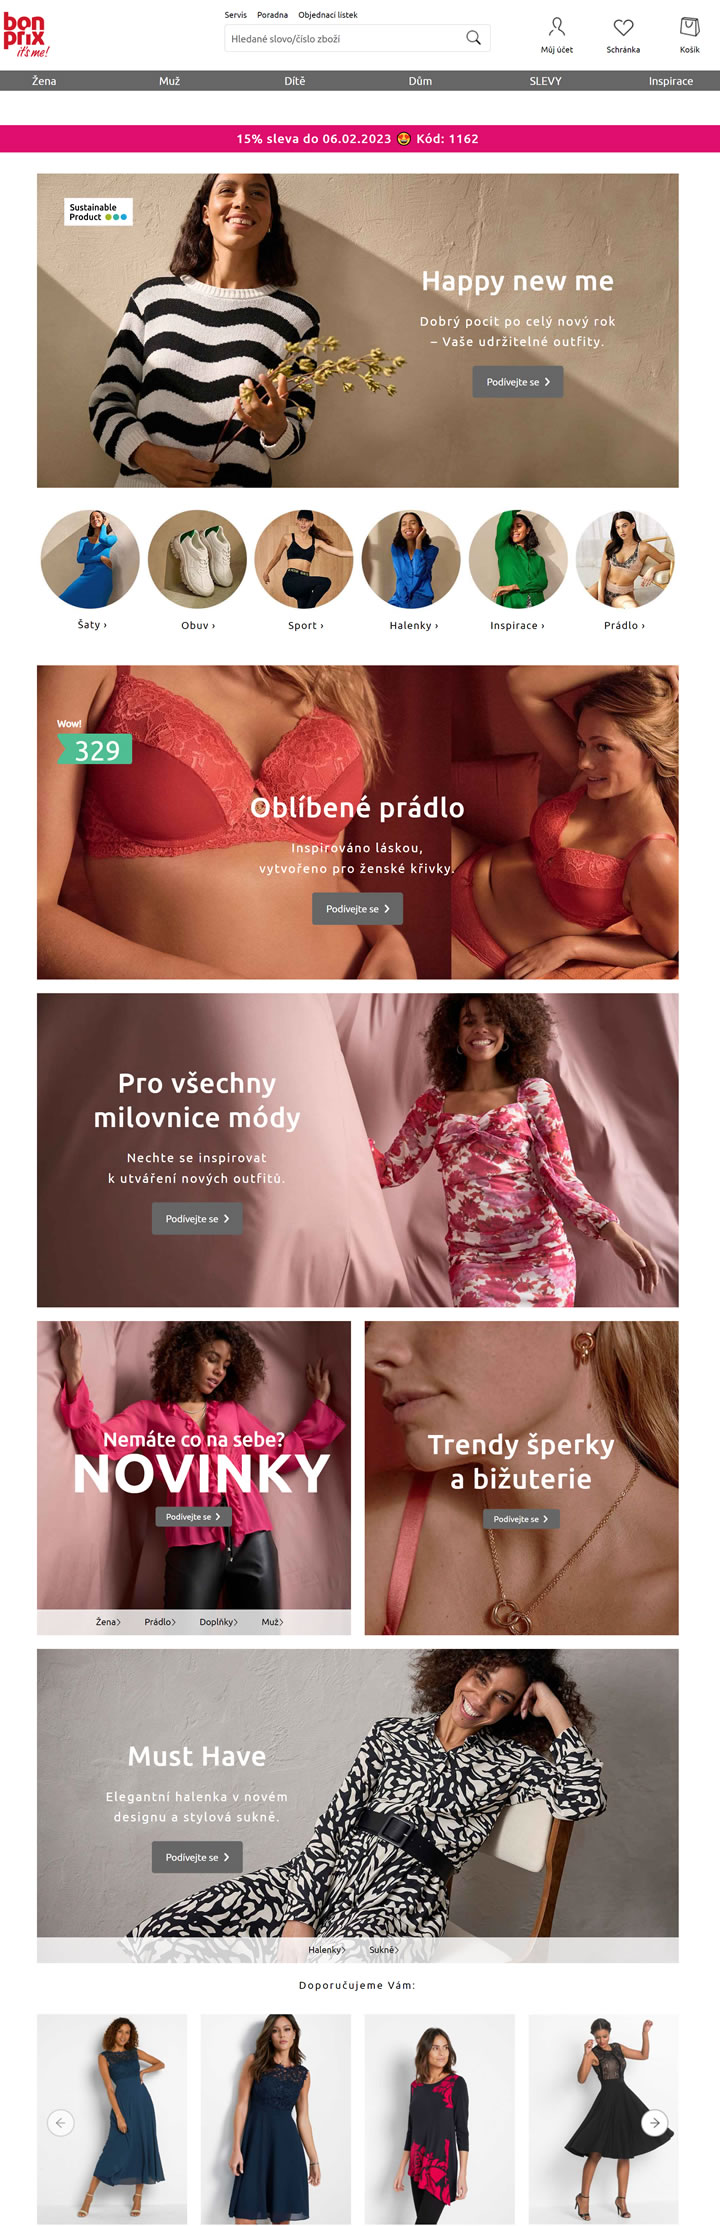 Bonprix.cz：捷克时尚与家居用品的一站式电子商店